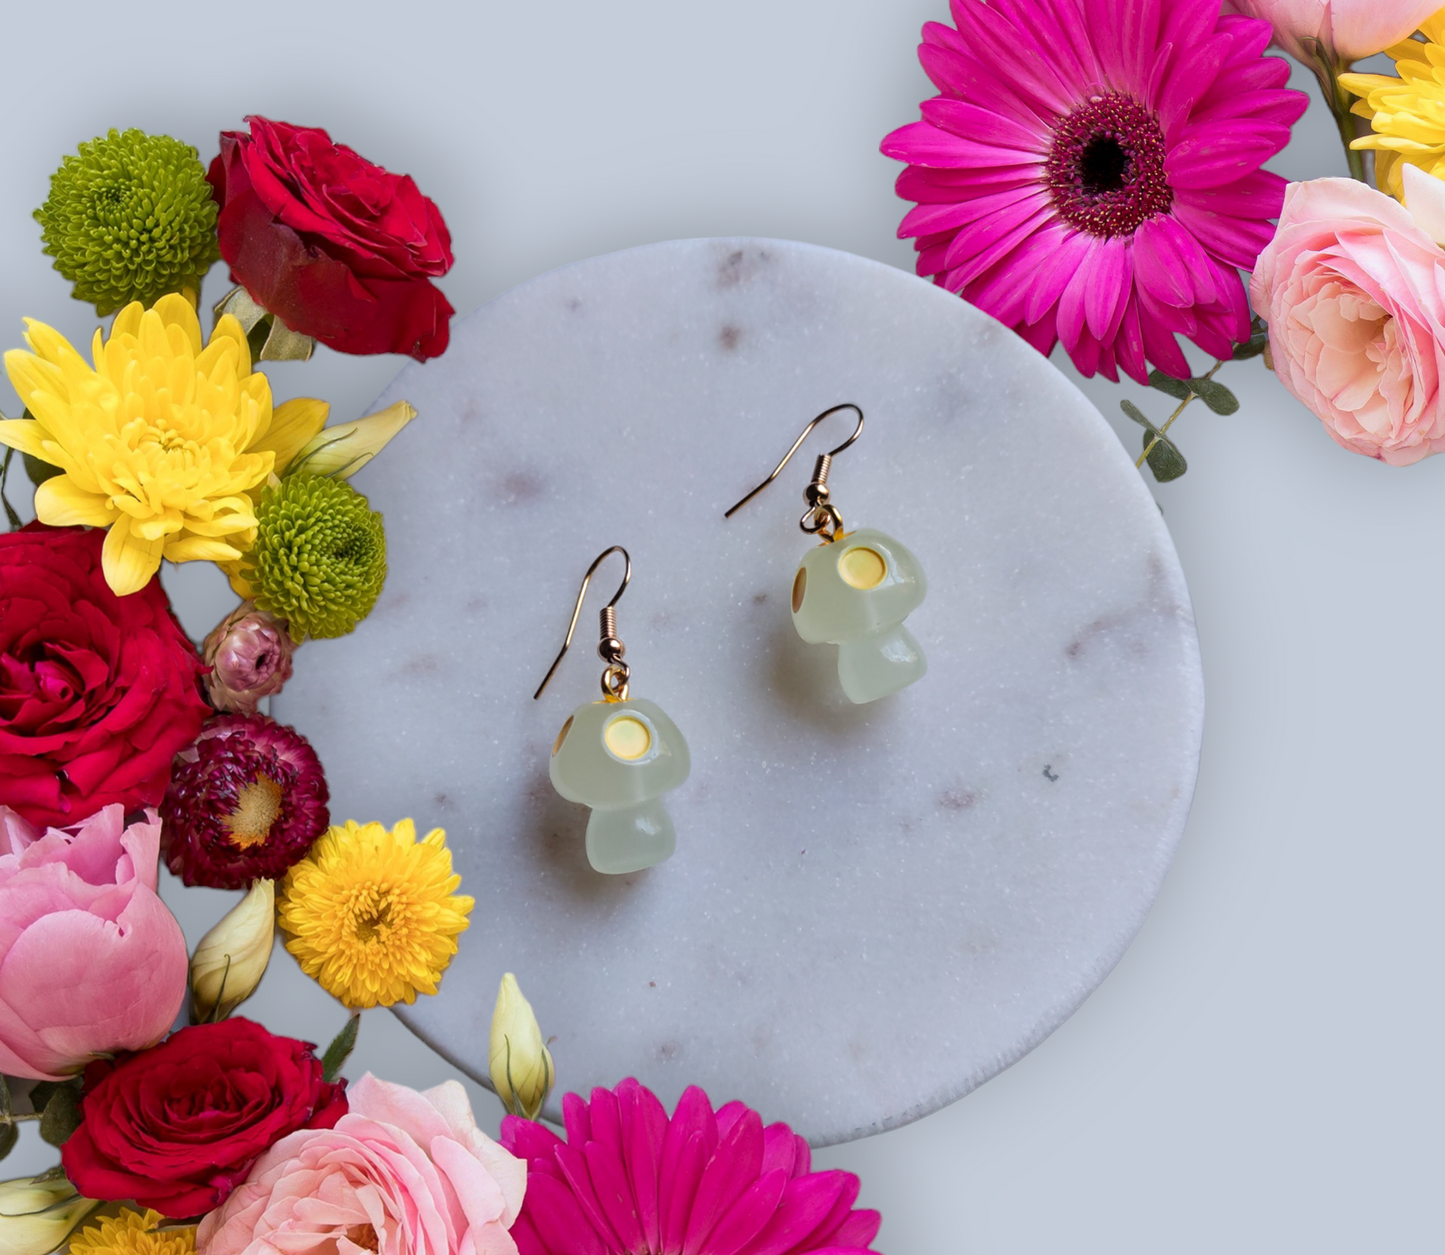 Mushroom Resin Charms earrings from Karma Goodness Designs